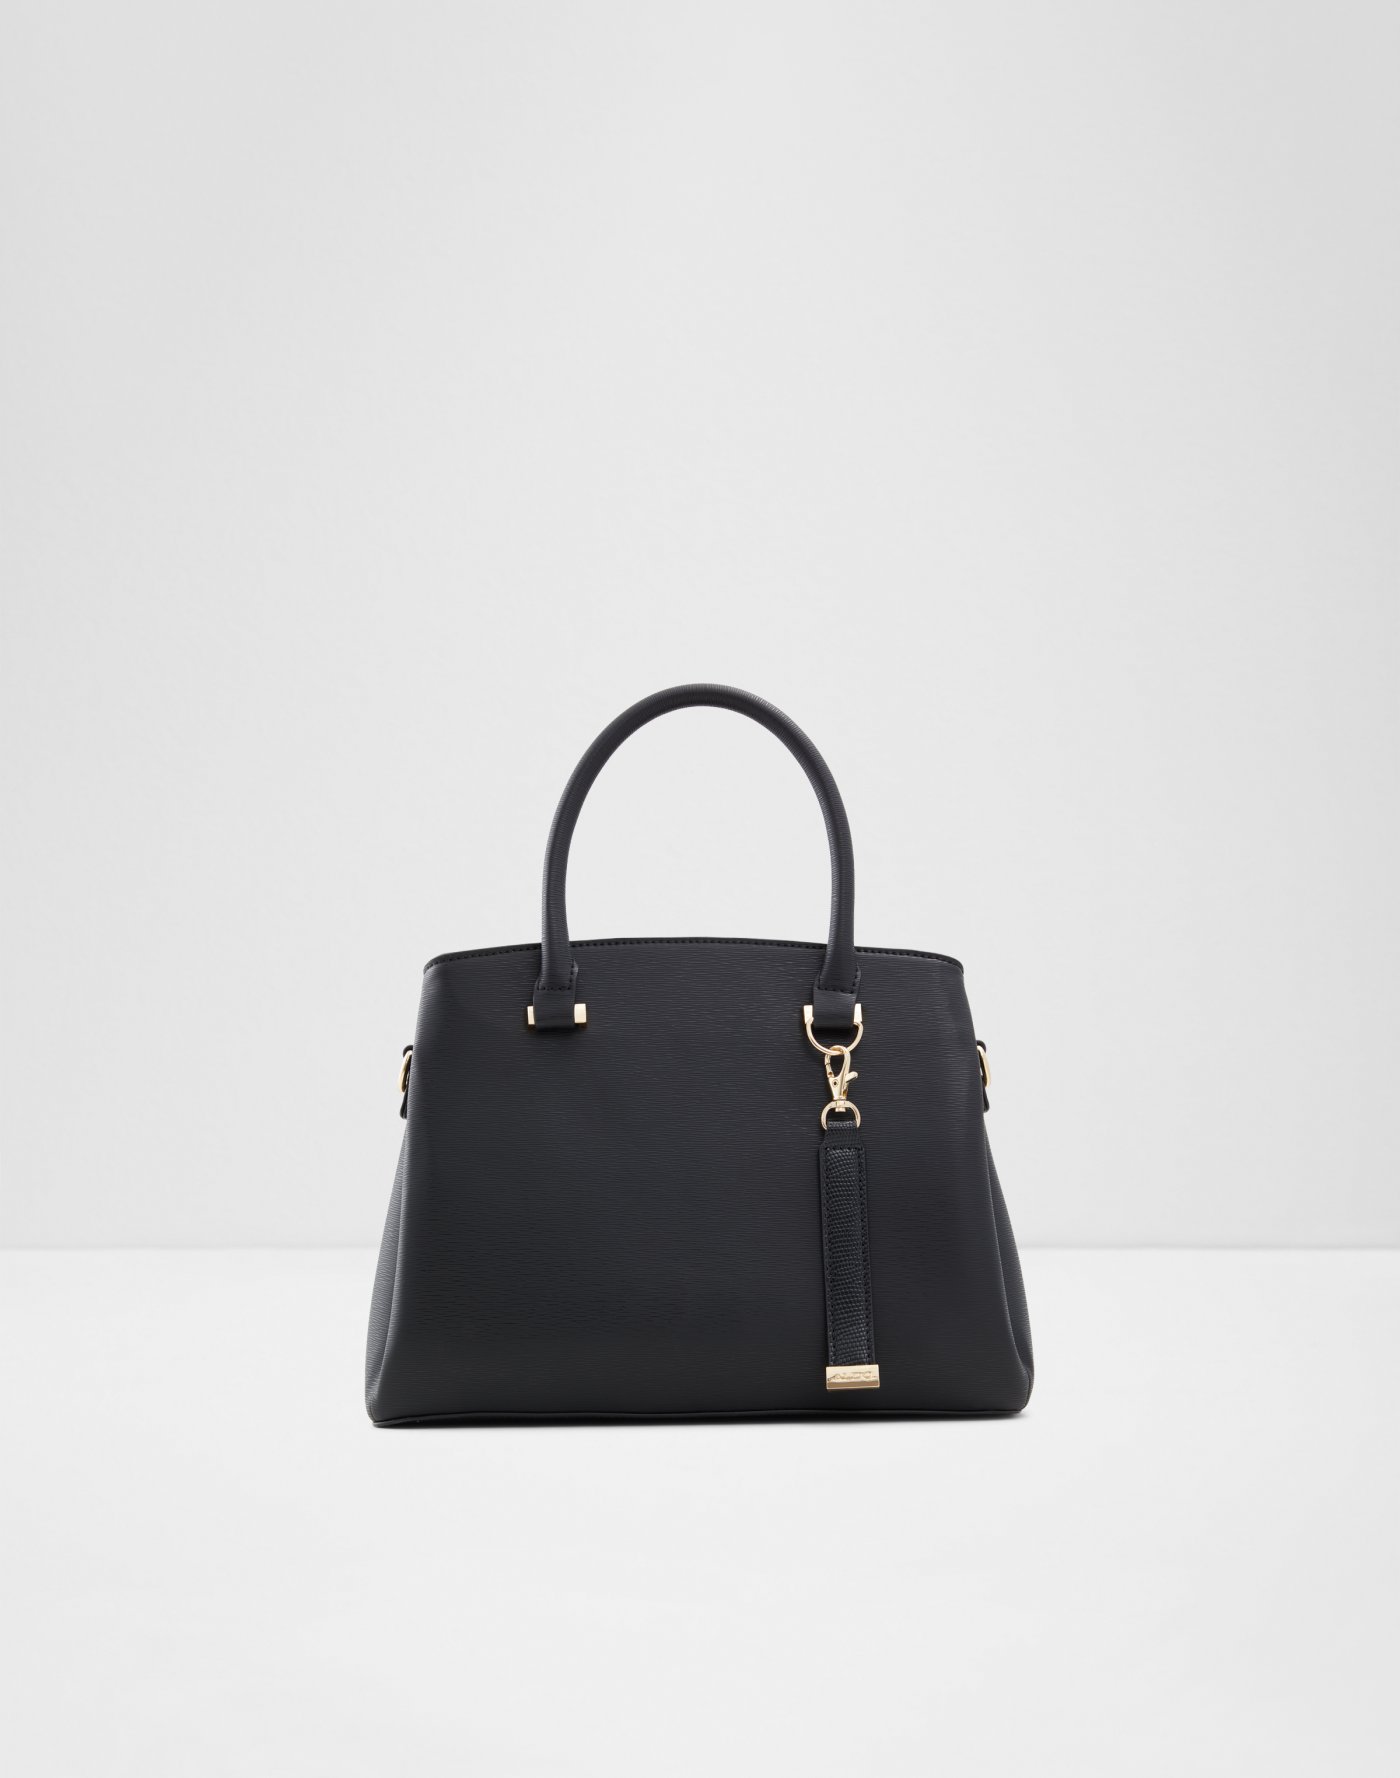 All Handbags | ALDO US